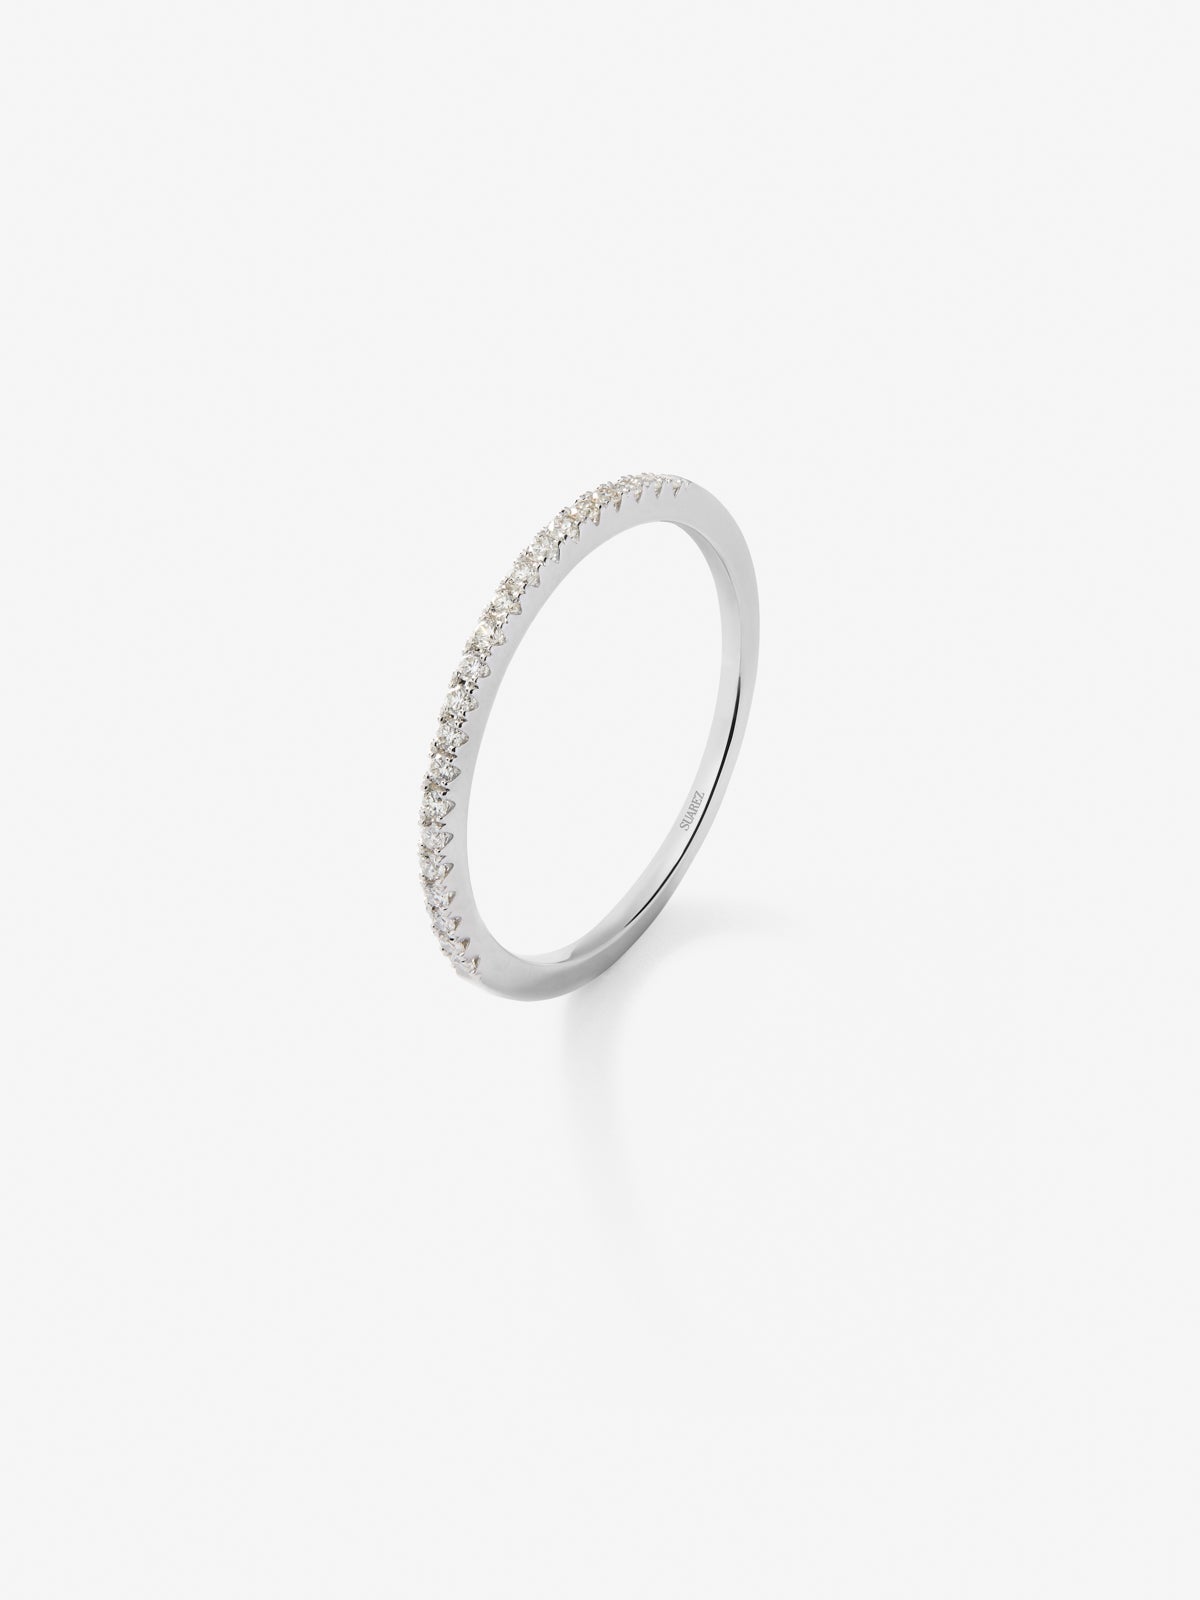 18K white gold medium engagement ring with diamonds